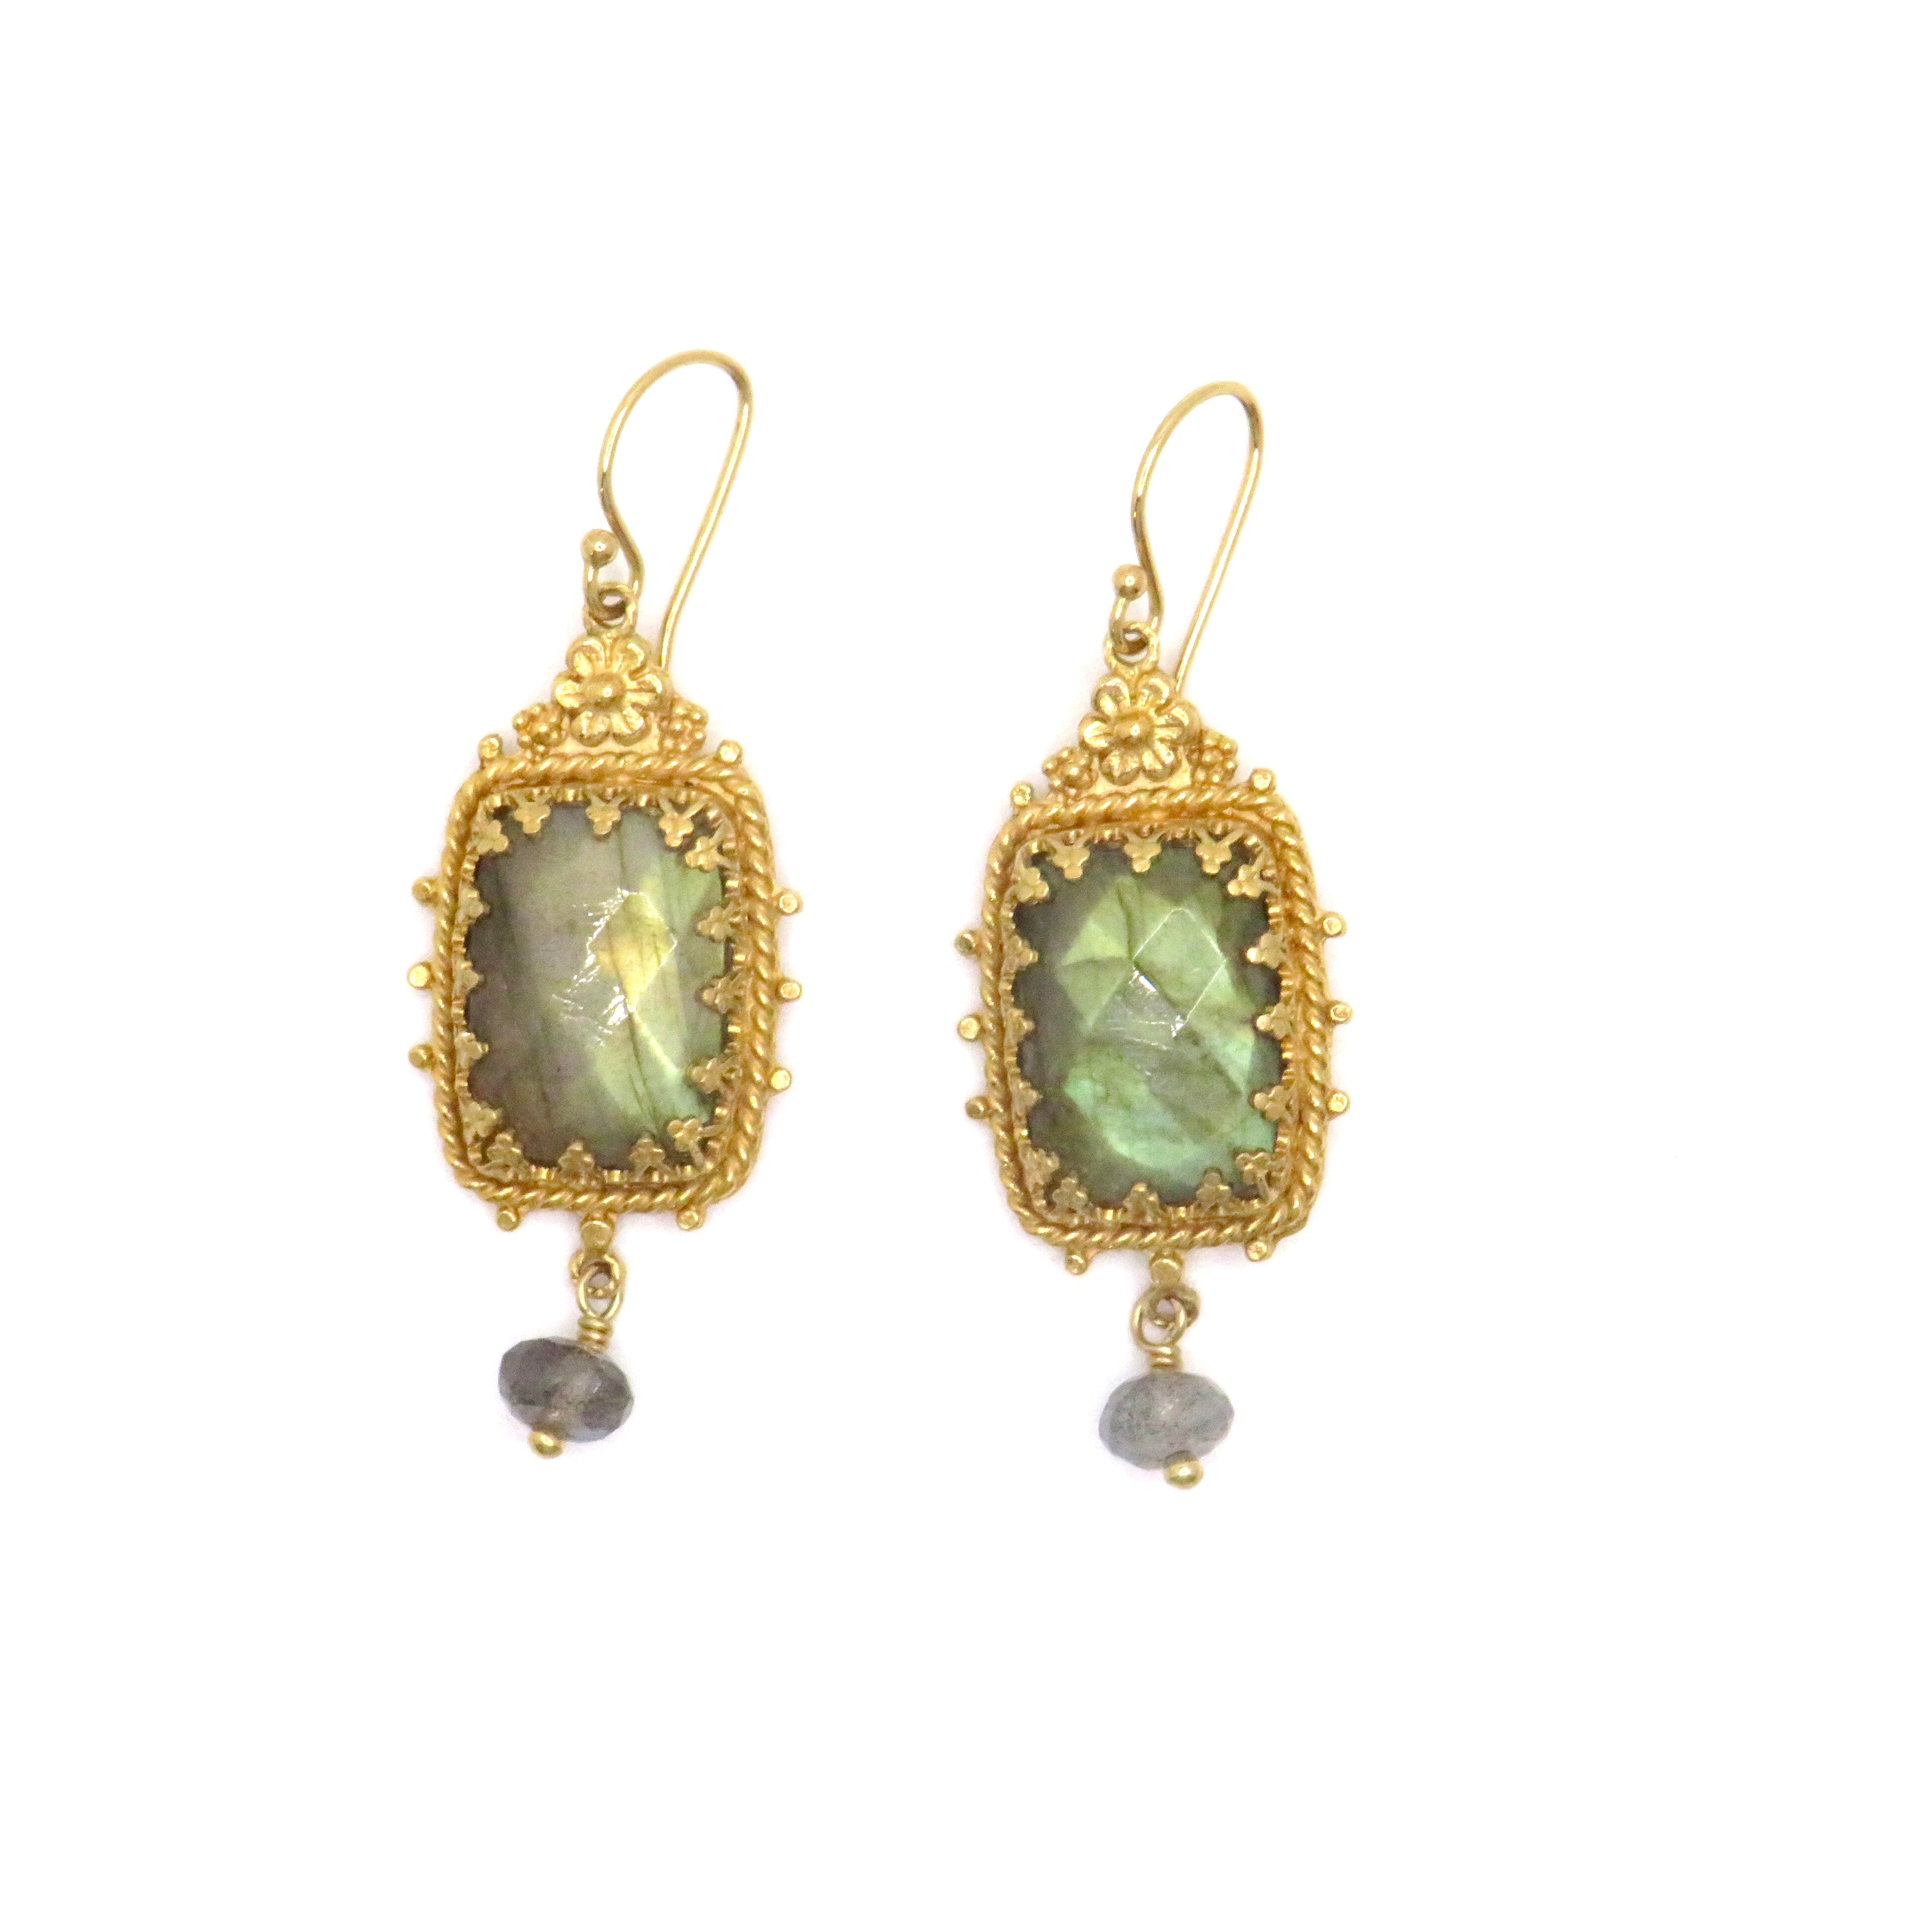 gold earrings with labradorite gemstone